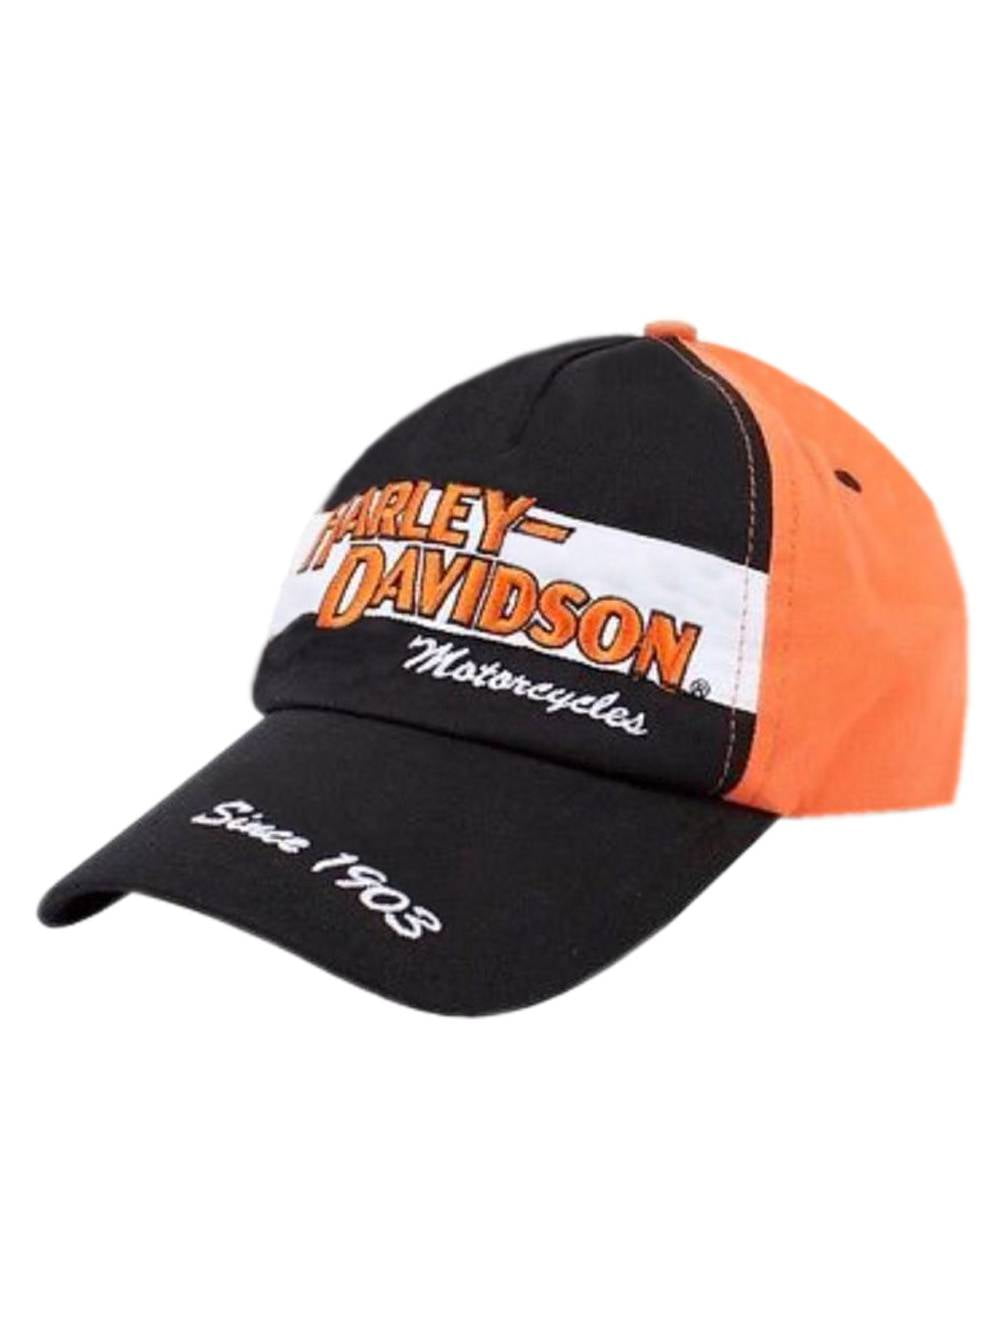 Harley Davidson Big Boys Baseball Cap Youth H D Prestige Twill Hat 0280282 Harley Davidson Walmart Com